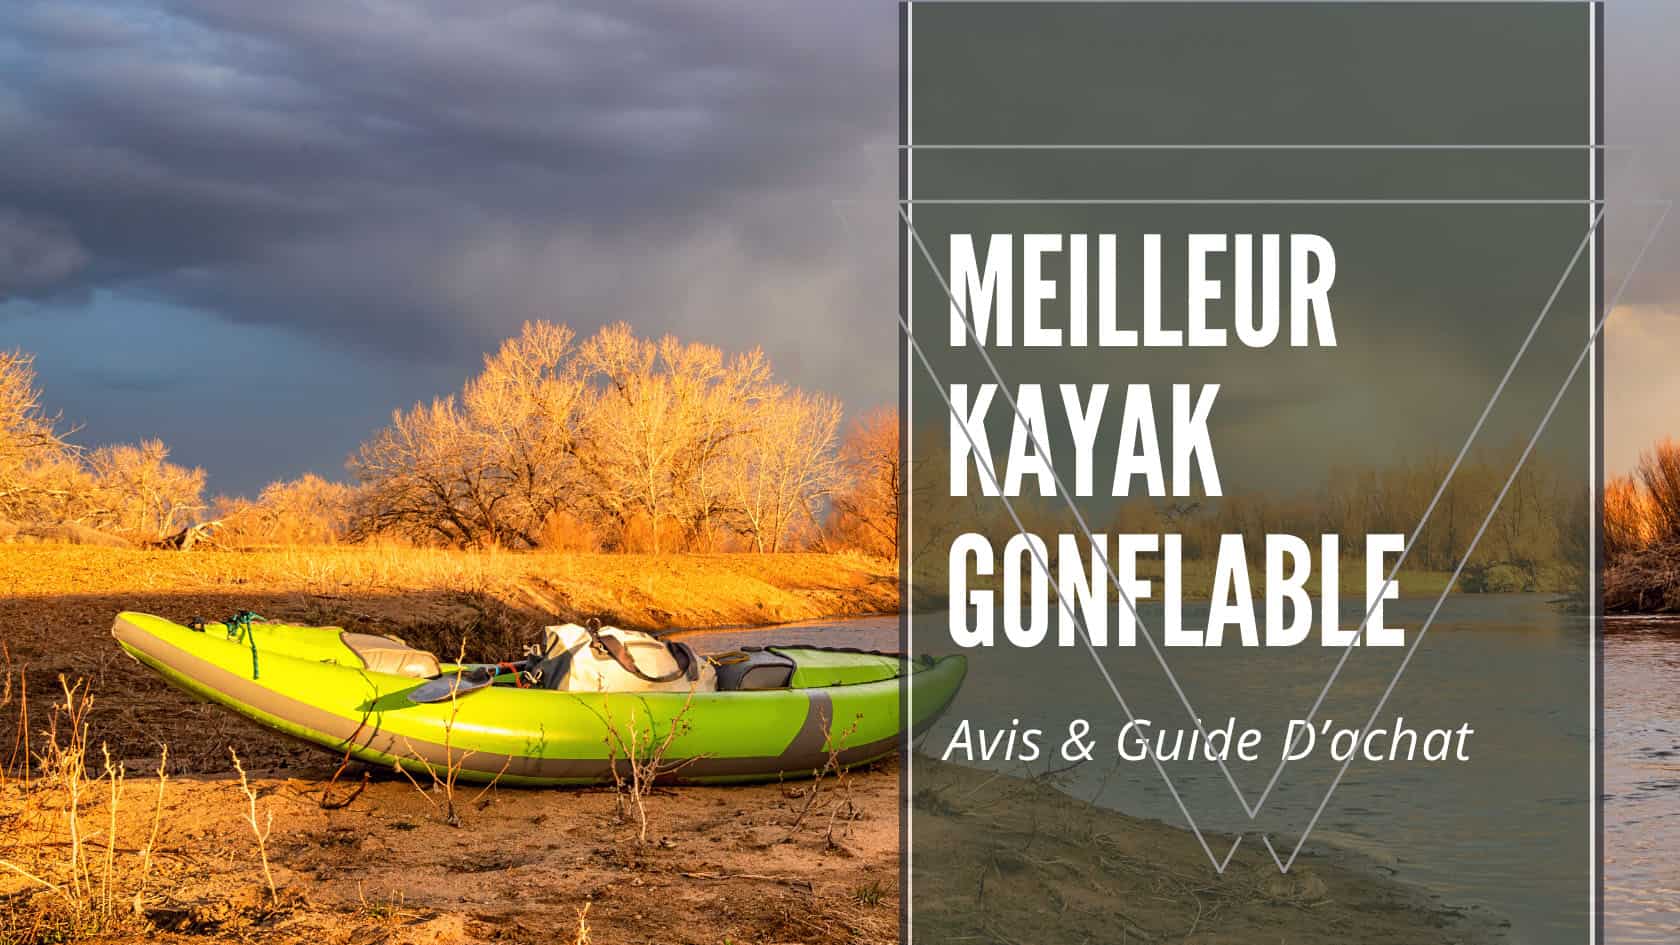 Meilleur Kayak Gonflable